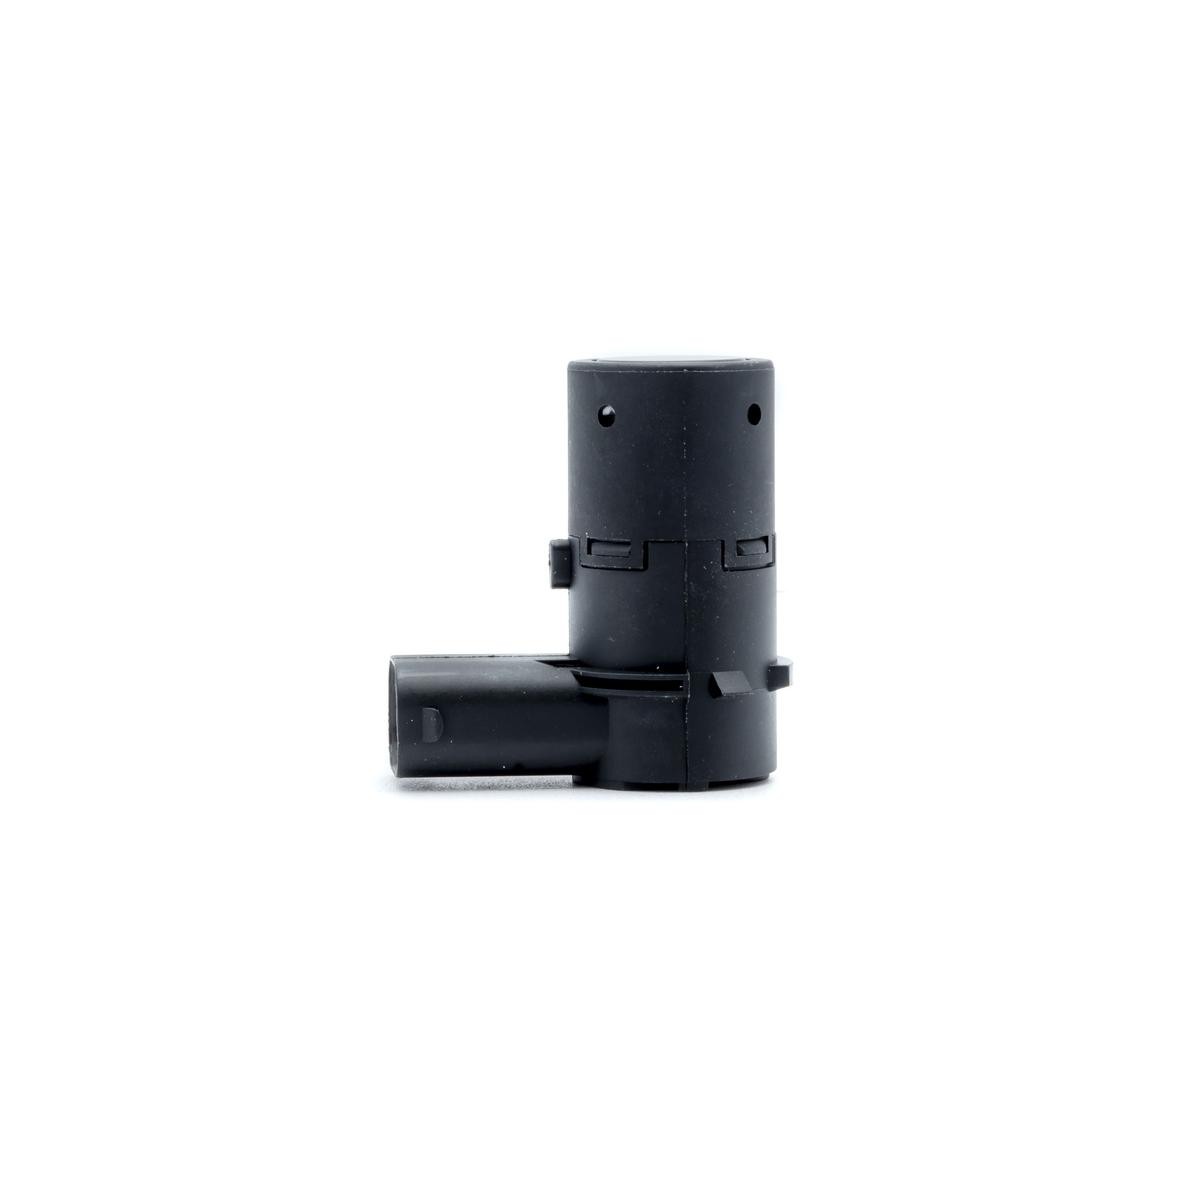 EINPARTS EPPDC61 PDC sensor black, Ultrasonic Sensor